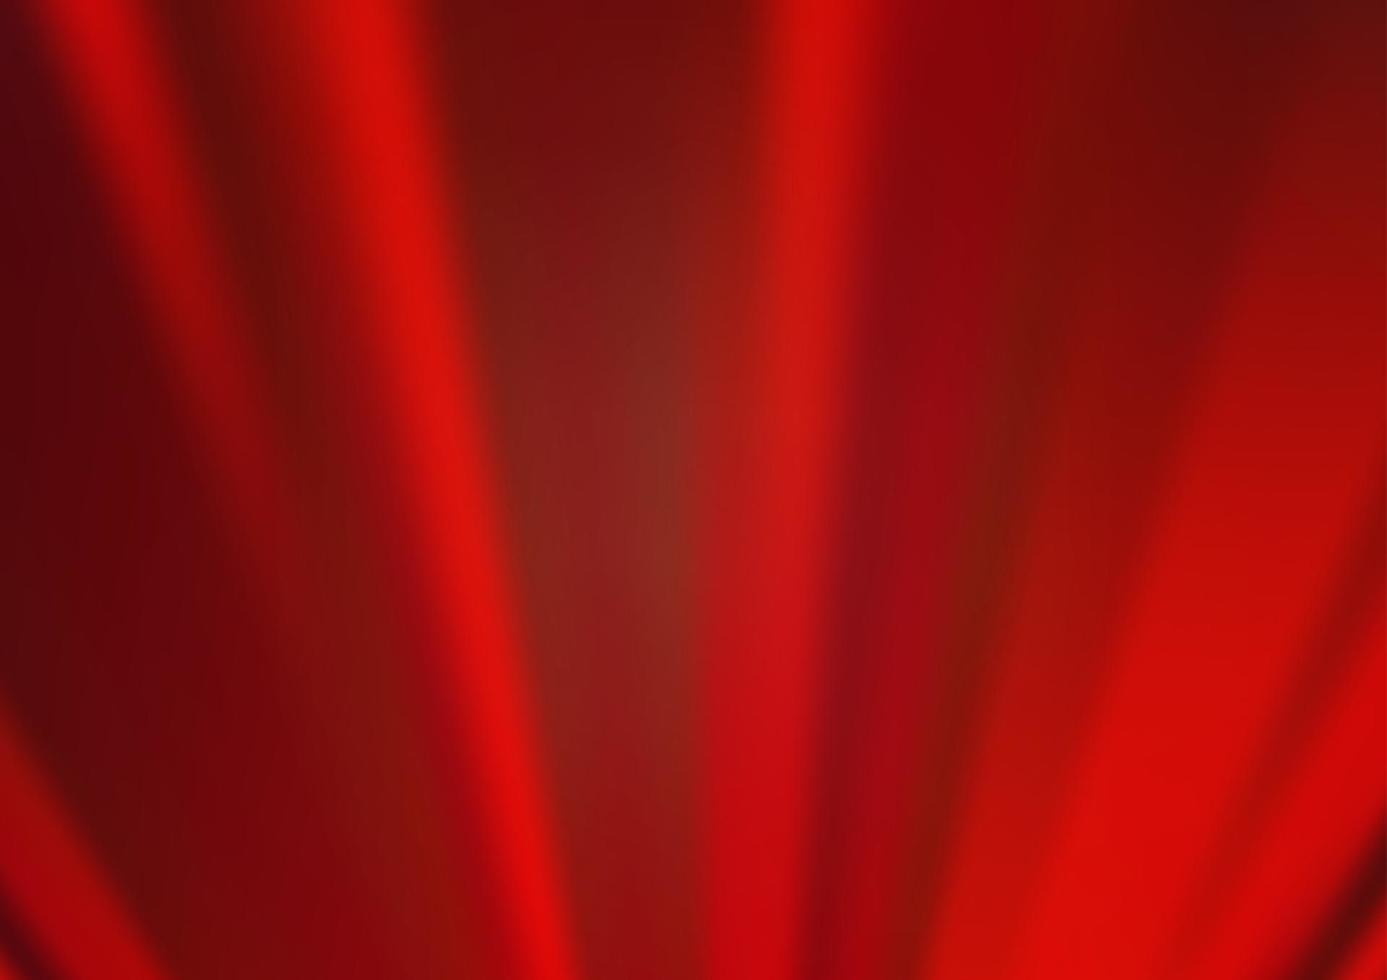 luz vermelha vector turva modelo abstrato de brilho.